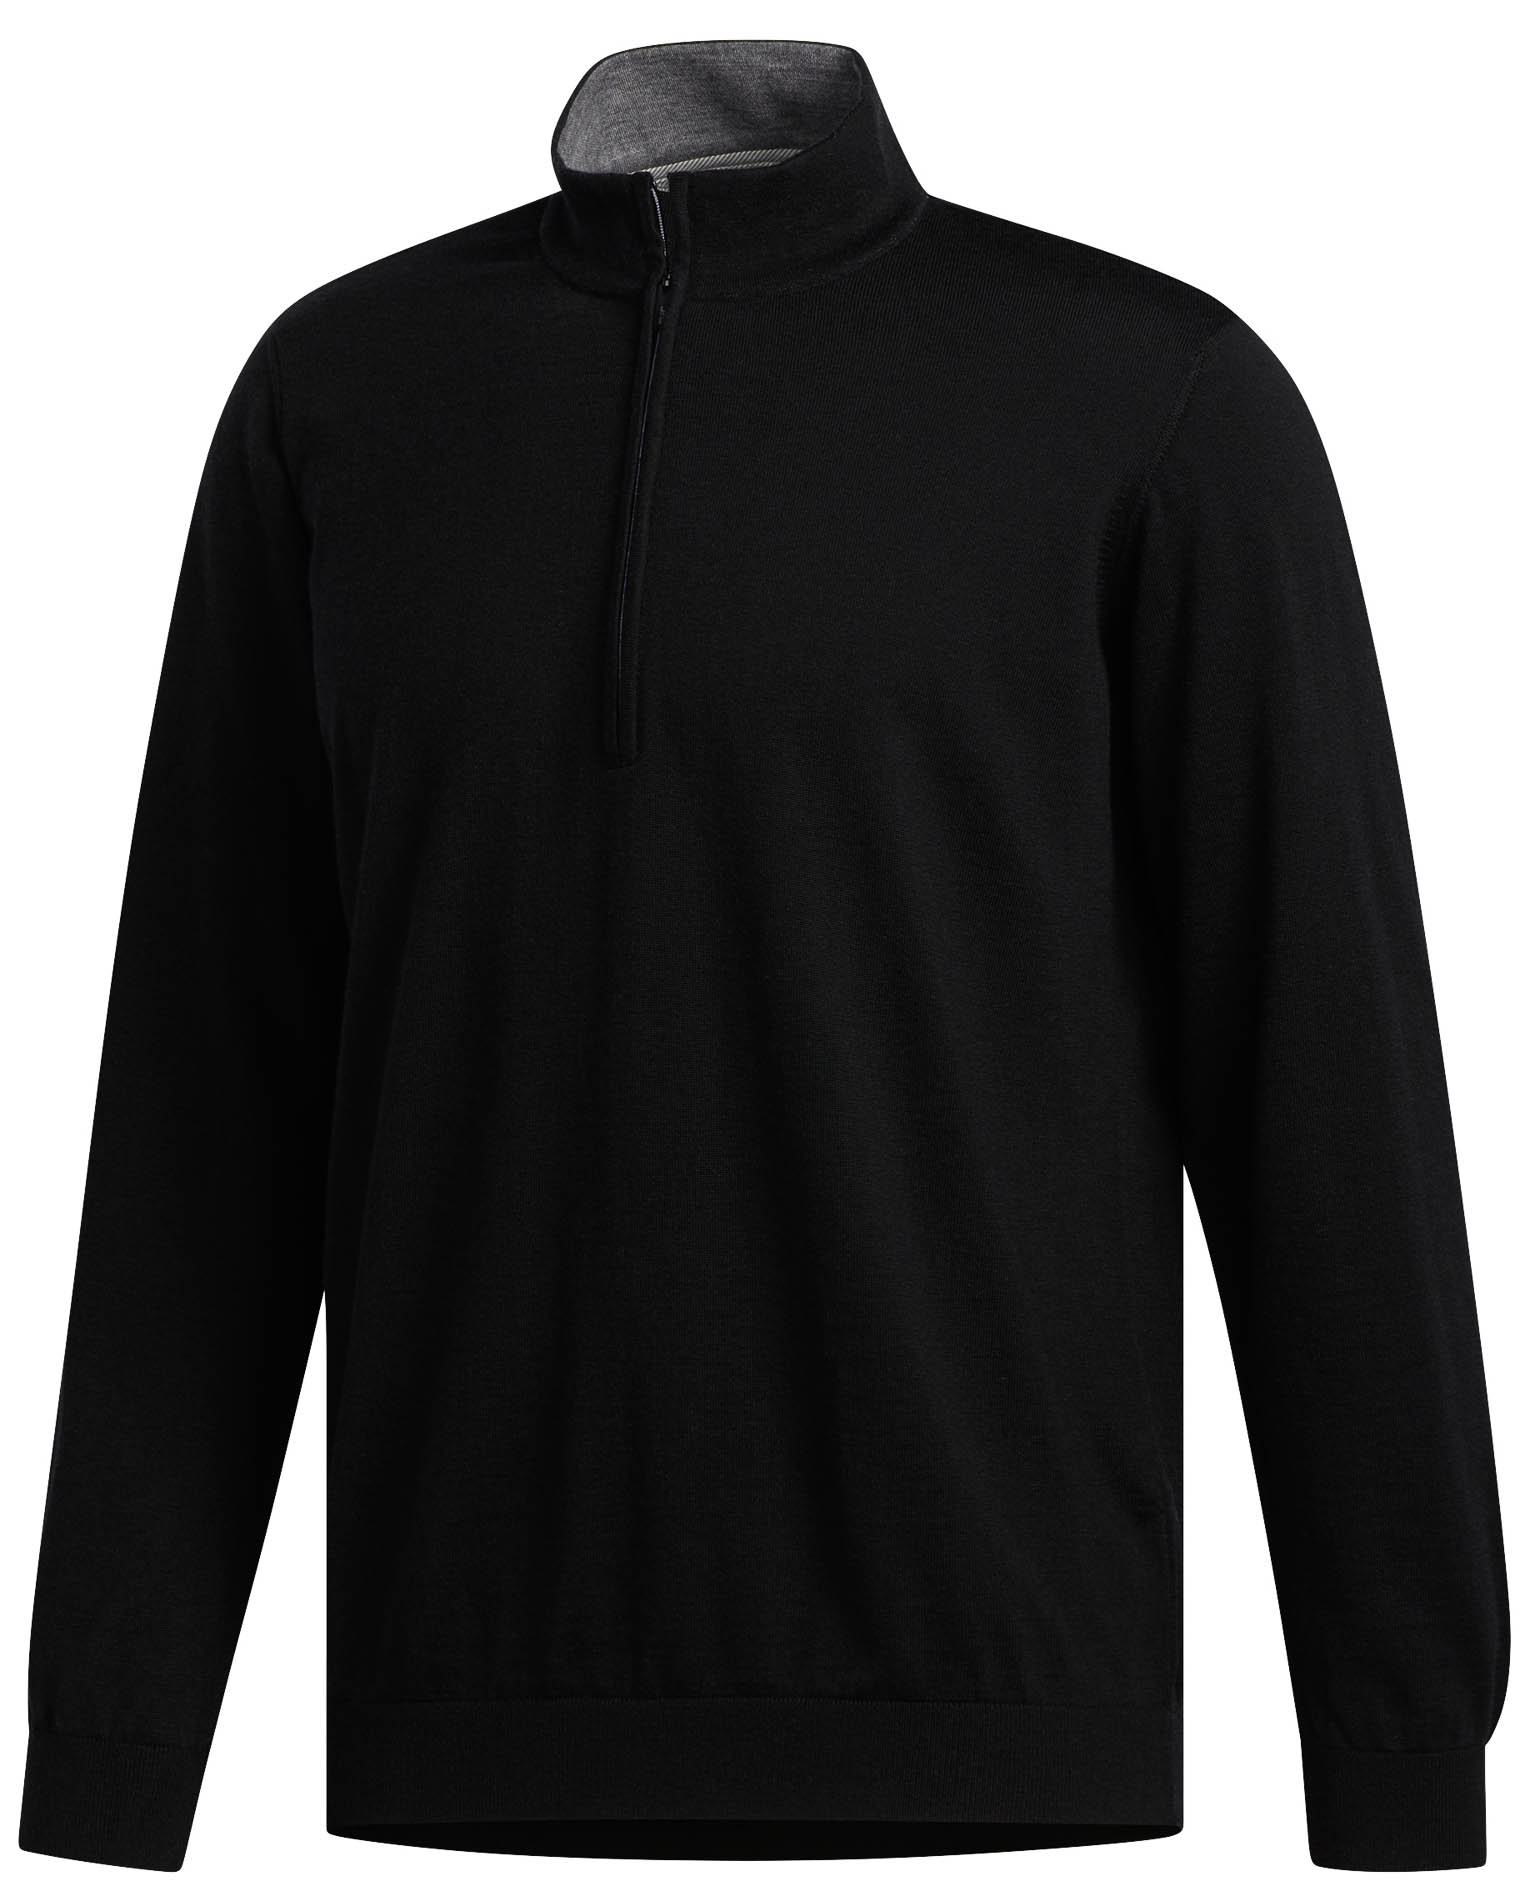 adidas adiPure Refined Zip Sweater, black